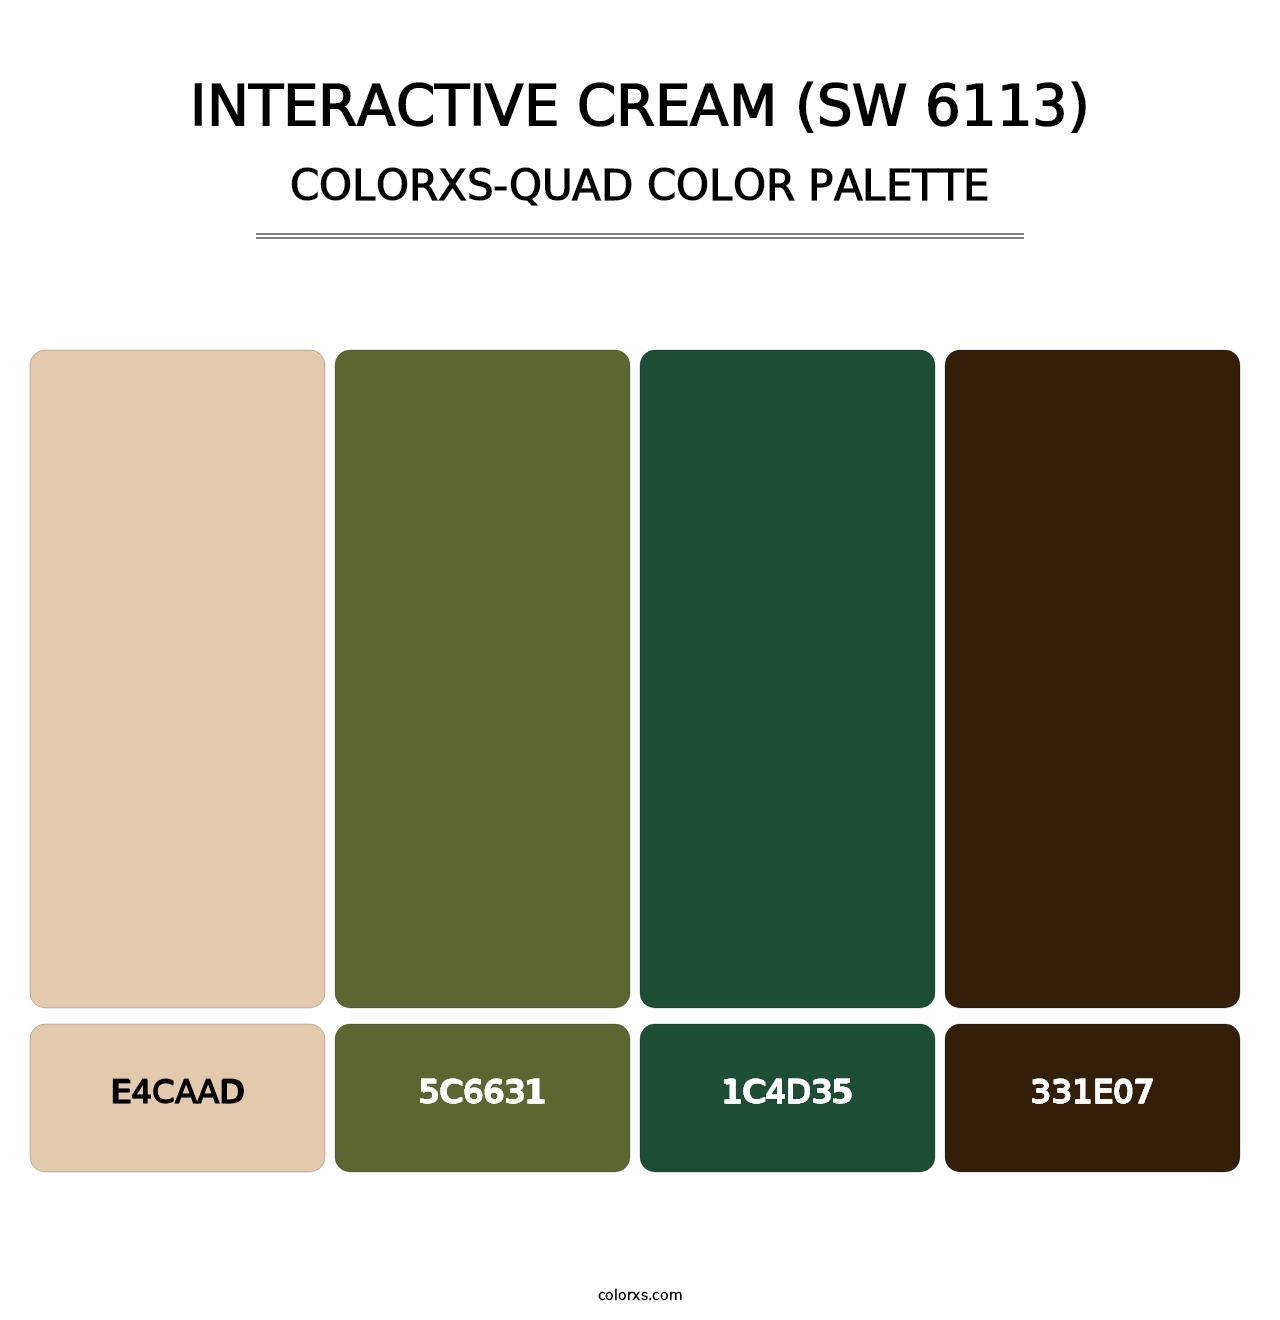 Interactive Cream (SW 6113) - Colorxs Quad Palette